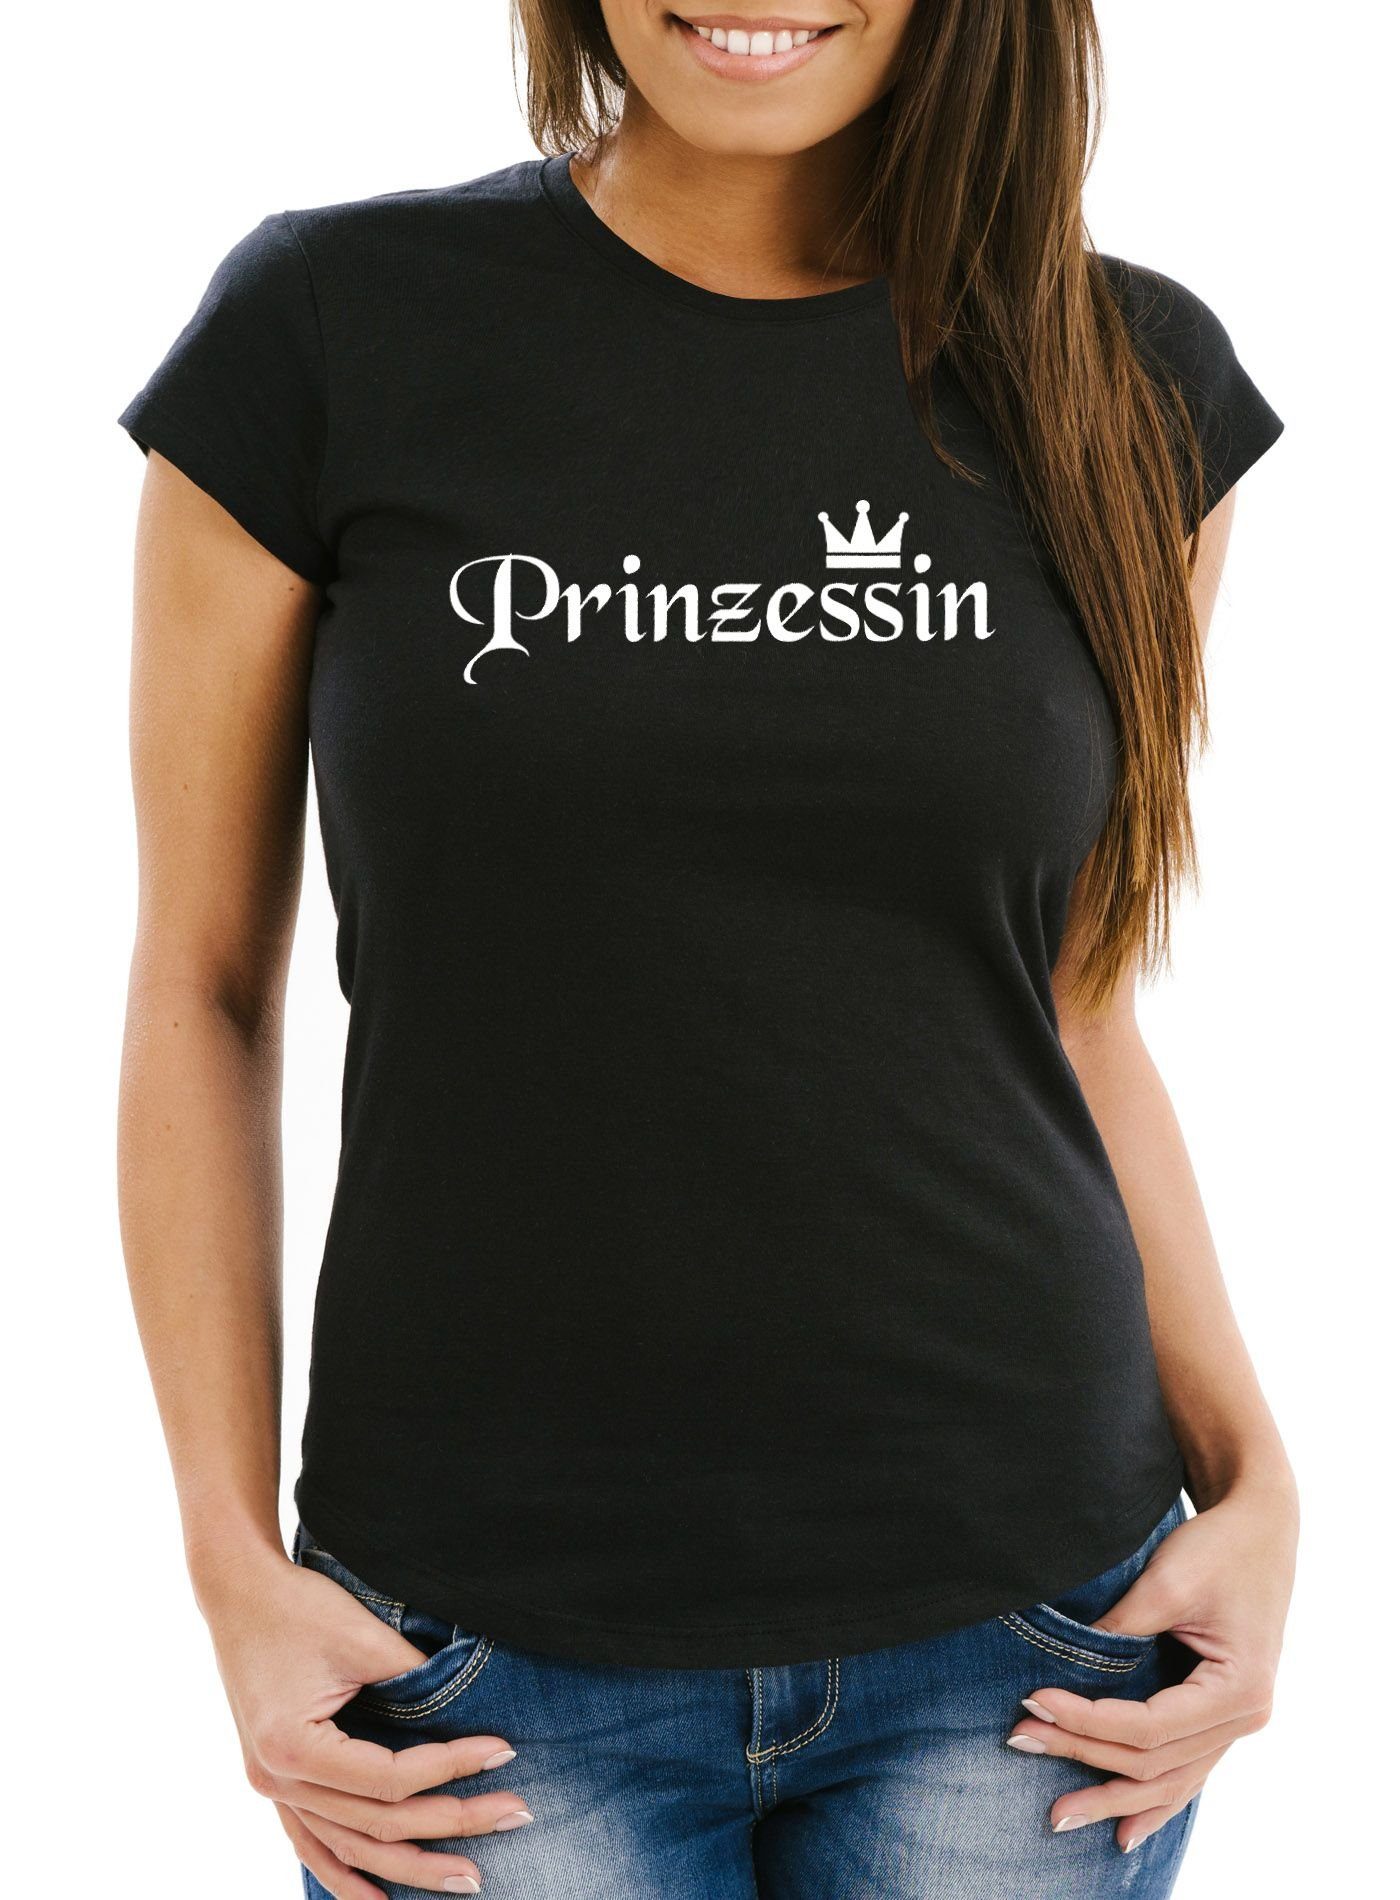 Crown Damen Fit Print-Shirt Krone schwarz T-Shirt Print Prinzessin MoonWorks Slim Princess mit Moonworks®